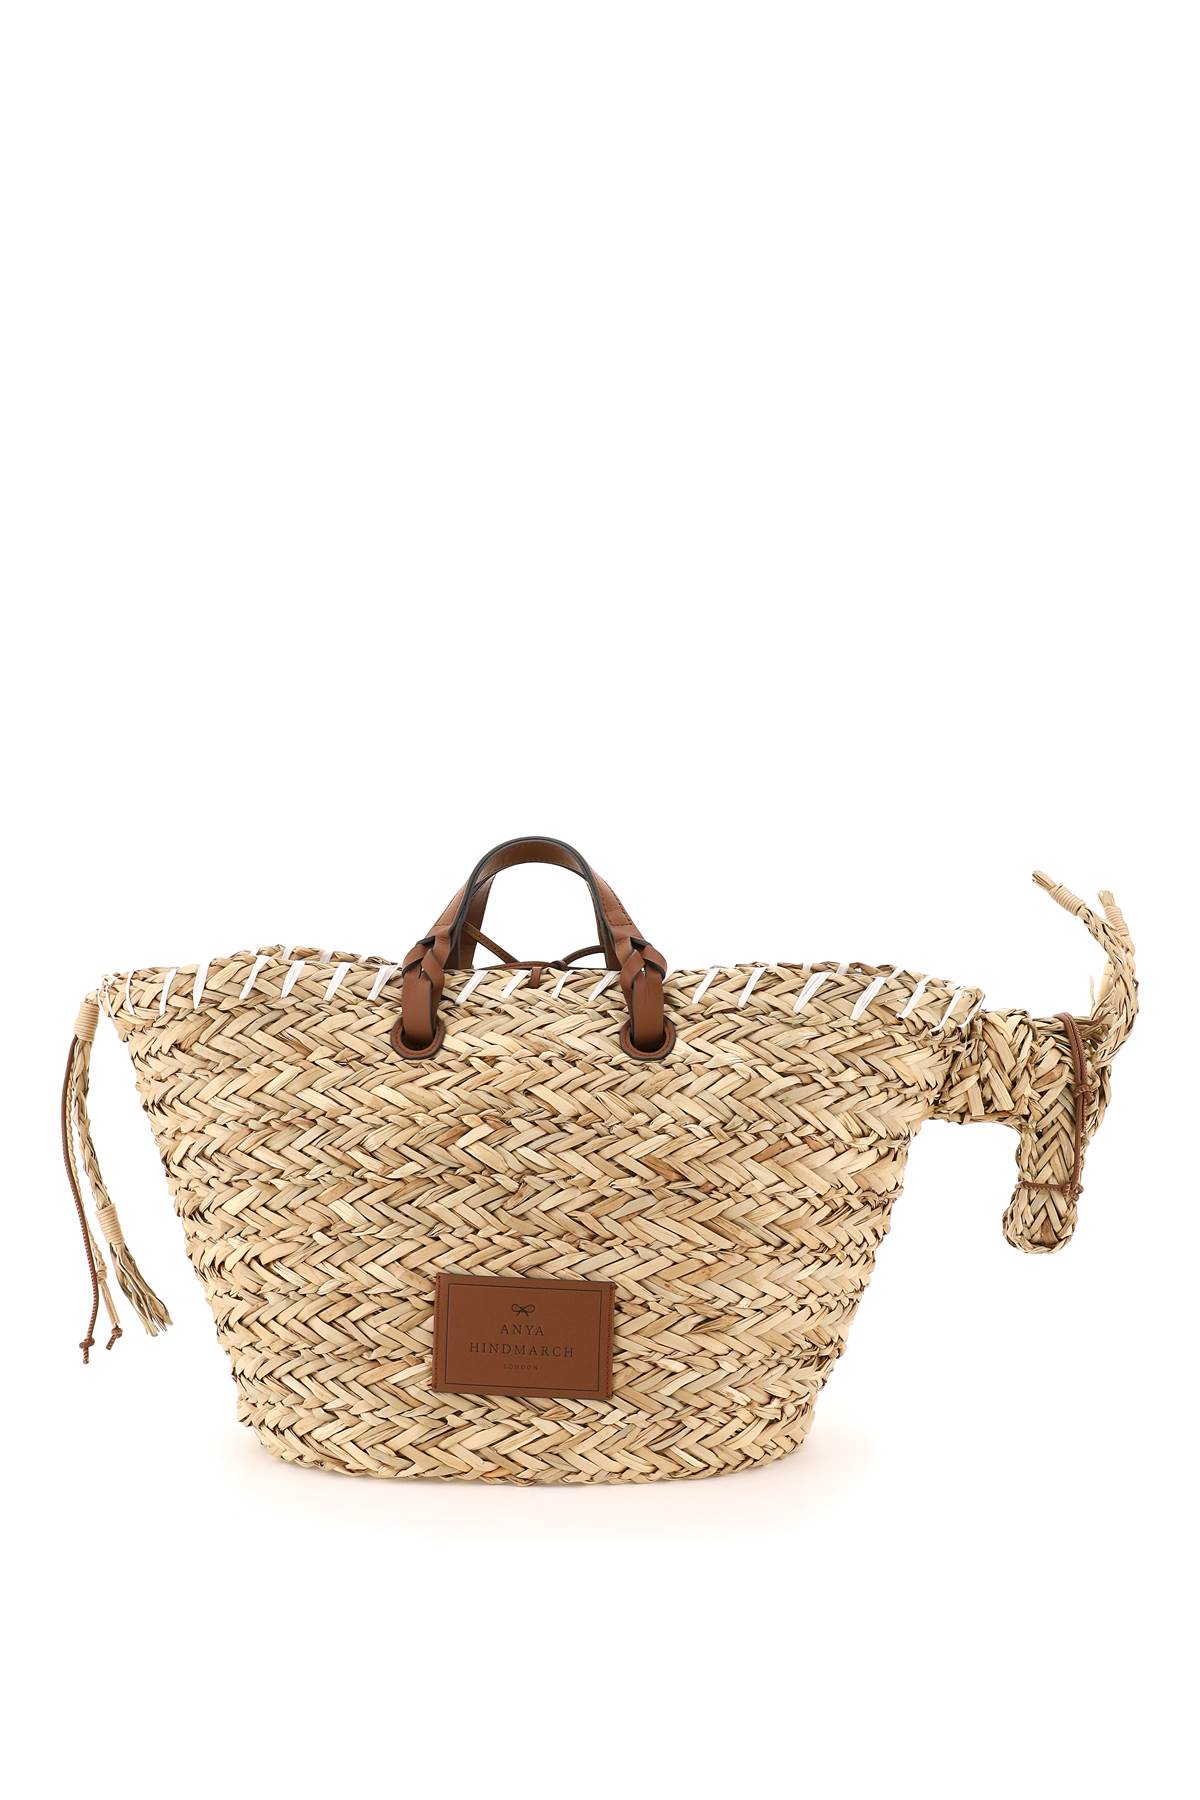 Anya Hindmarch Donkey Large Basket Bag